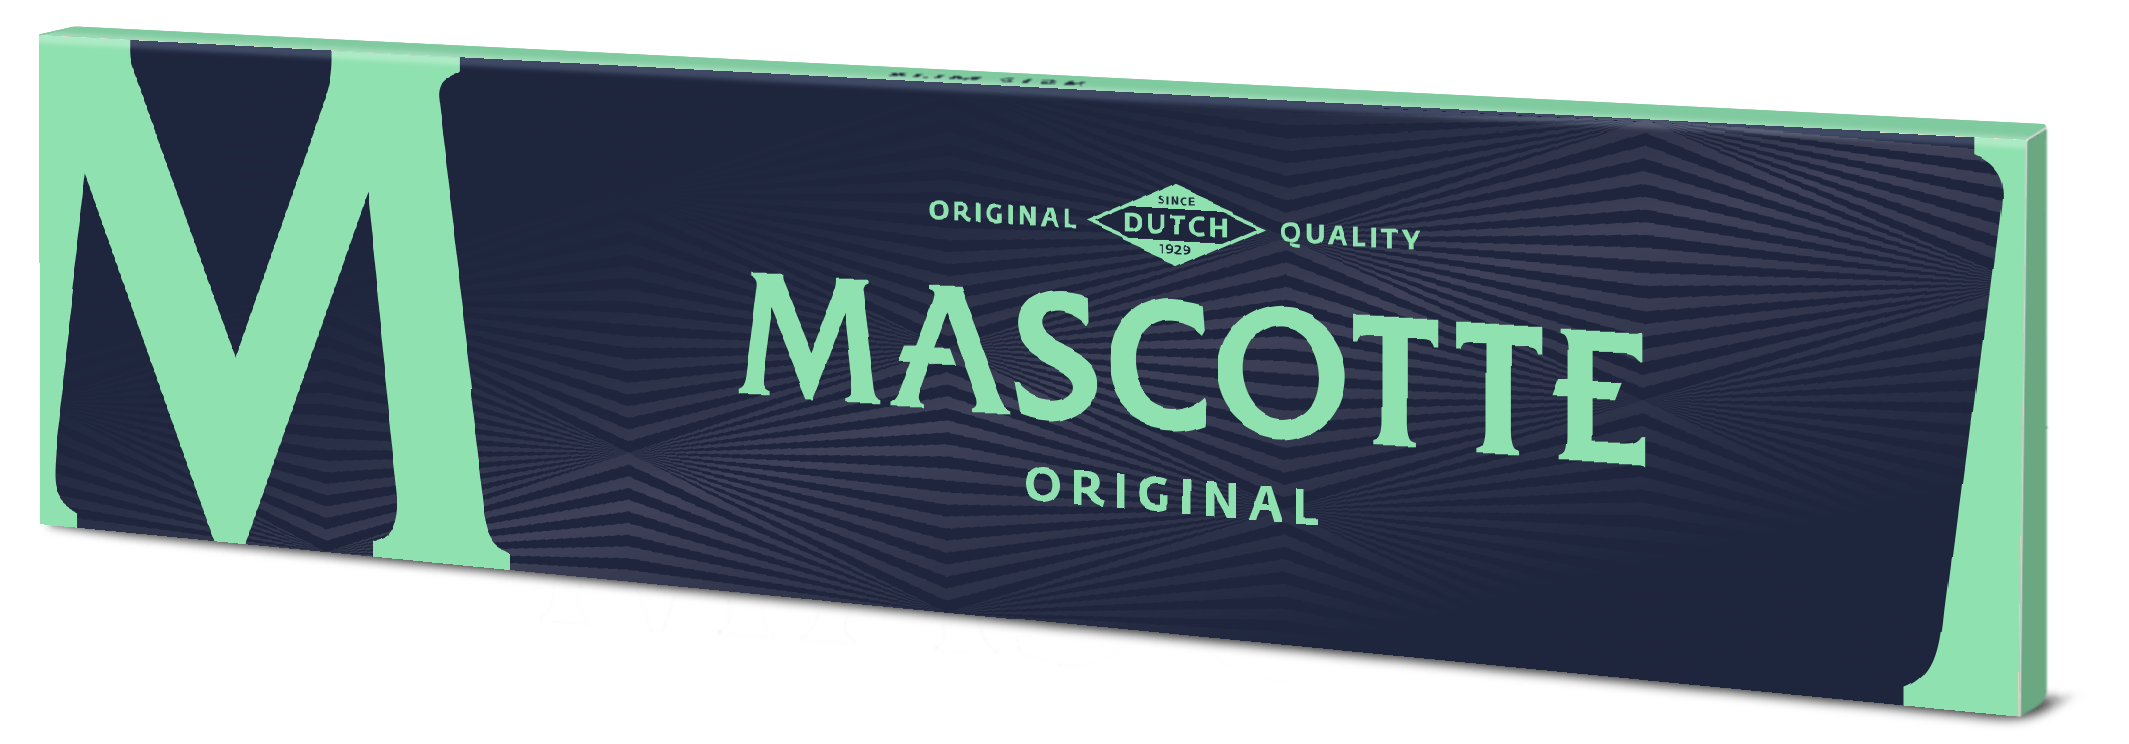 Original (Slim Size with magnet) - Mascotte